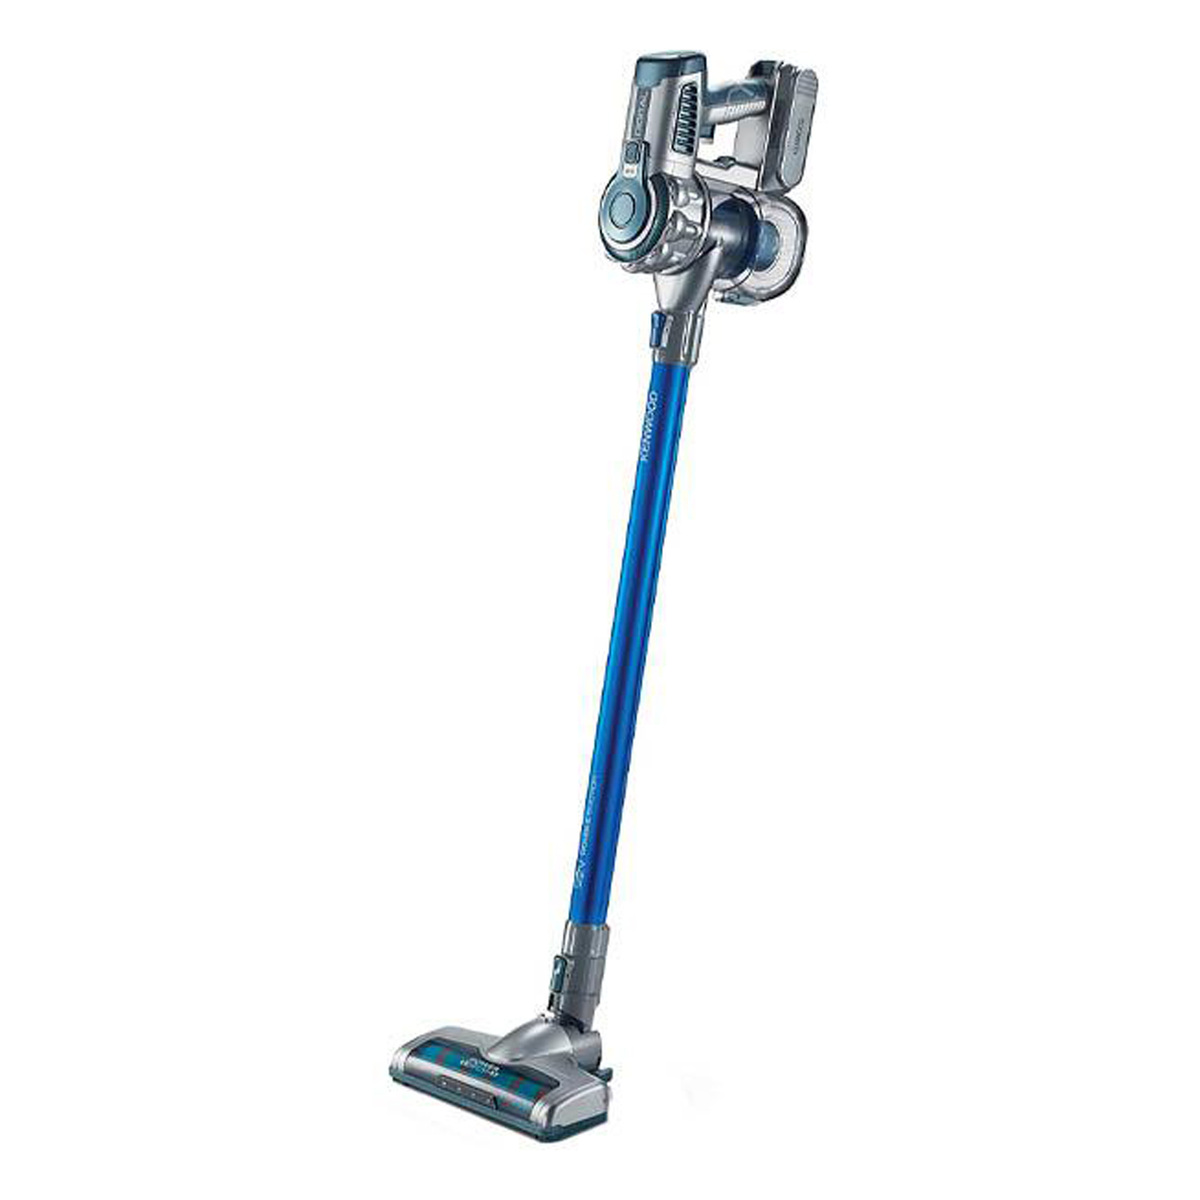 Kenwood 2 In 1 Upright Stick Cordless Vacuum Cleaner, Blue, SVD20.000BL